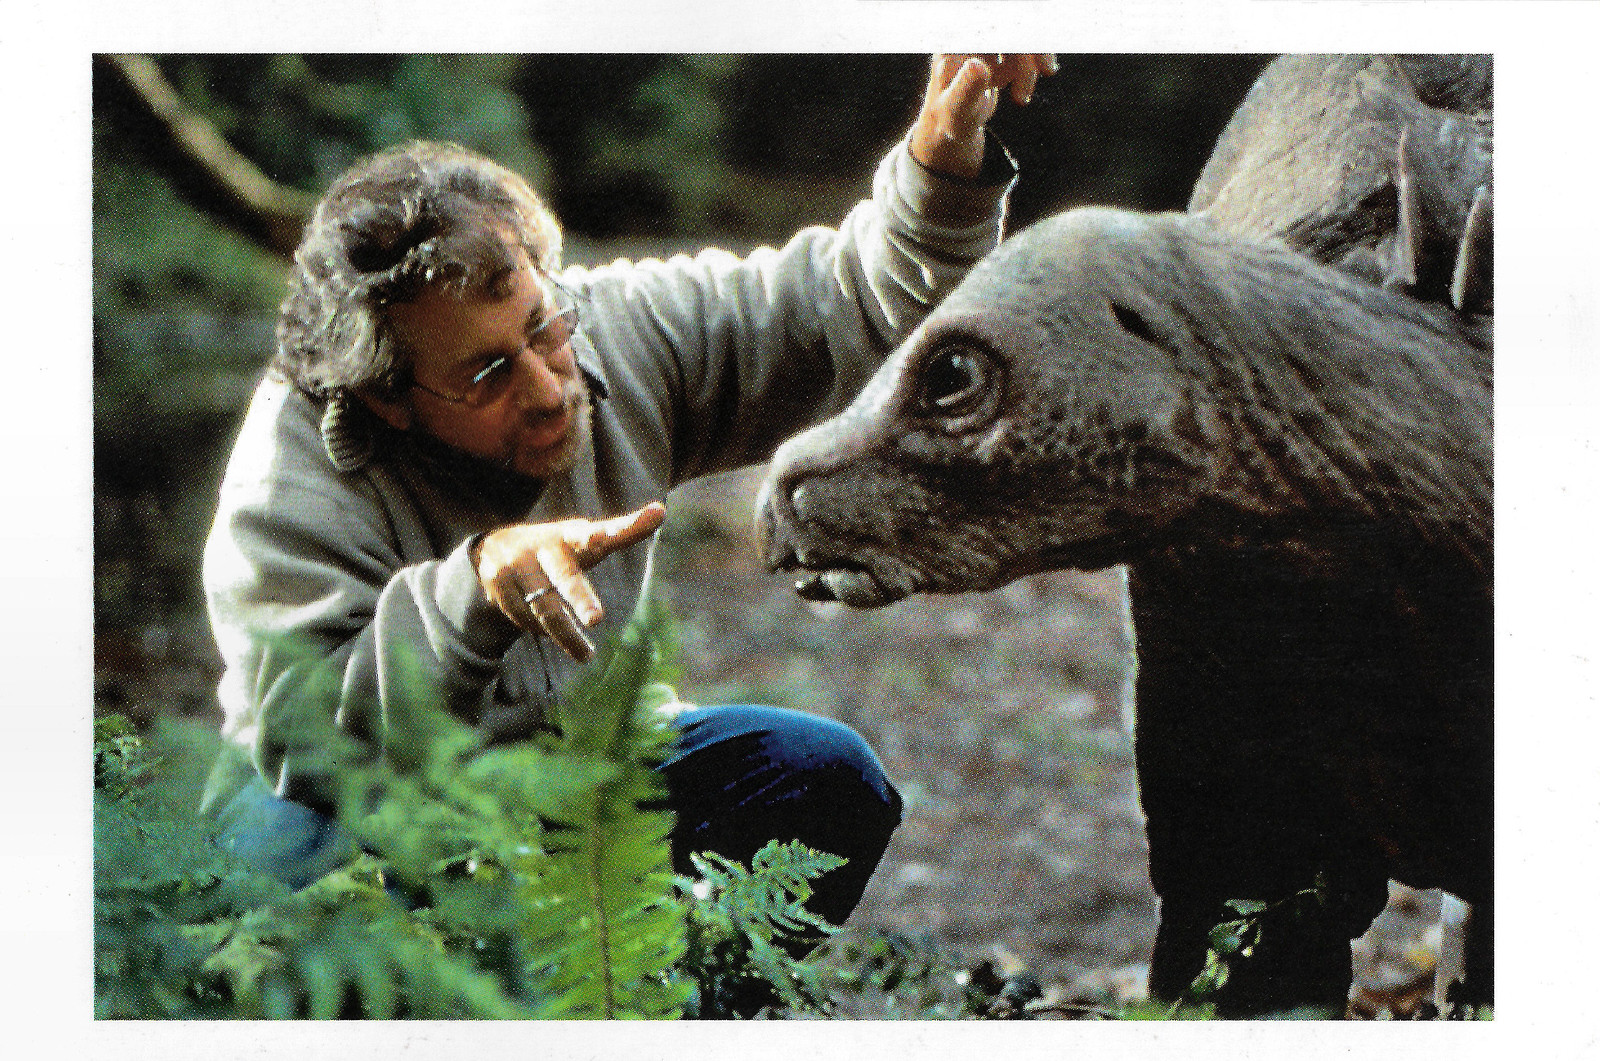 Steven Spielberg directing The Lost World - Jurassic Park (1997)